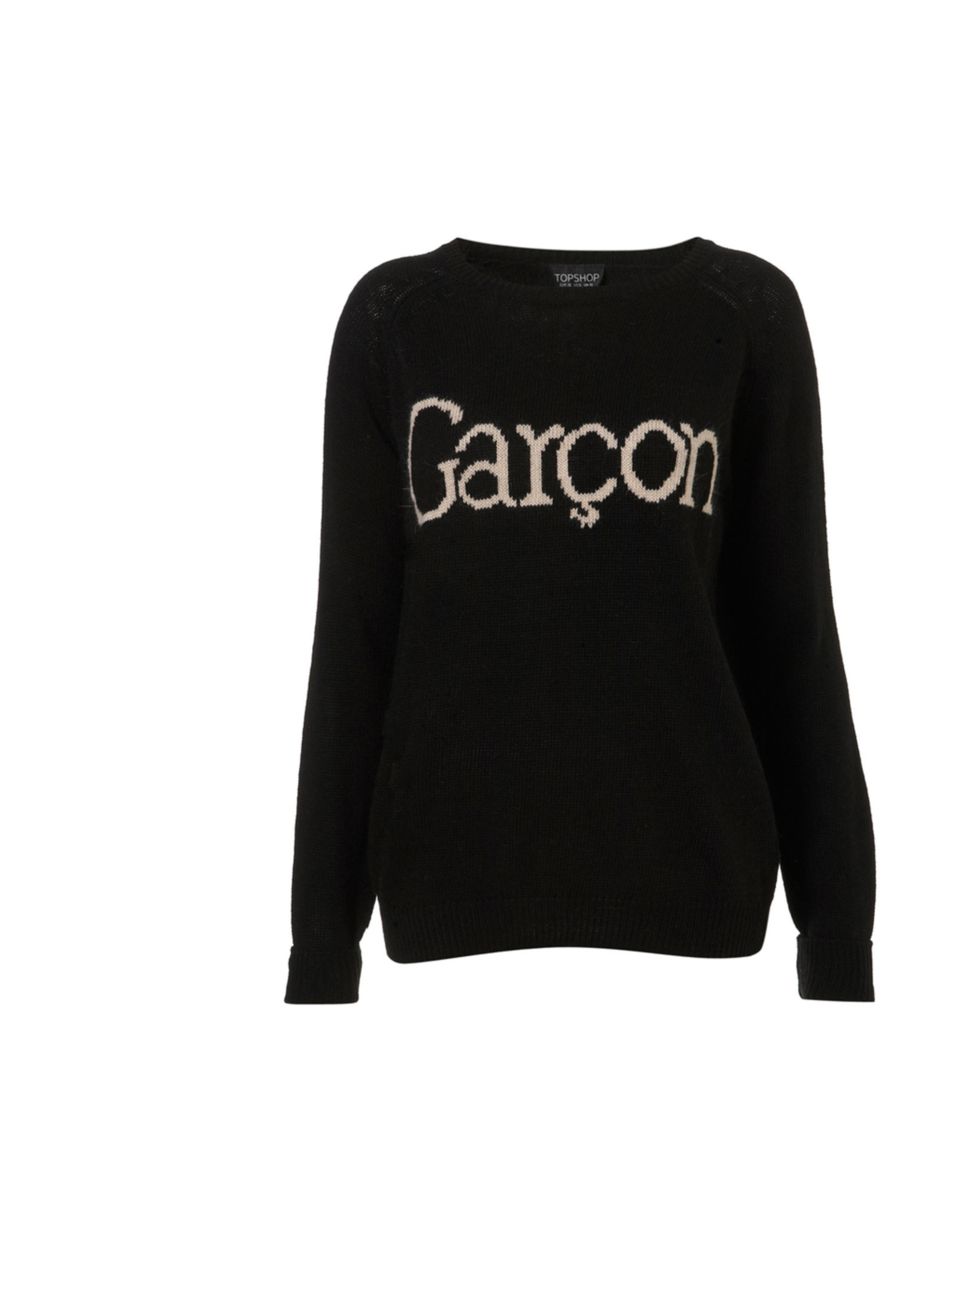 <p>Topshop 'Garcon' slogan sweater, £40</p><p><a href="http://shopping.elleuk.com/browse?fts=topshop+garcon">BUY NOW</a></p>